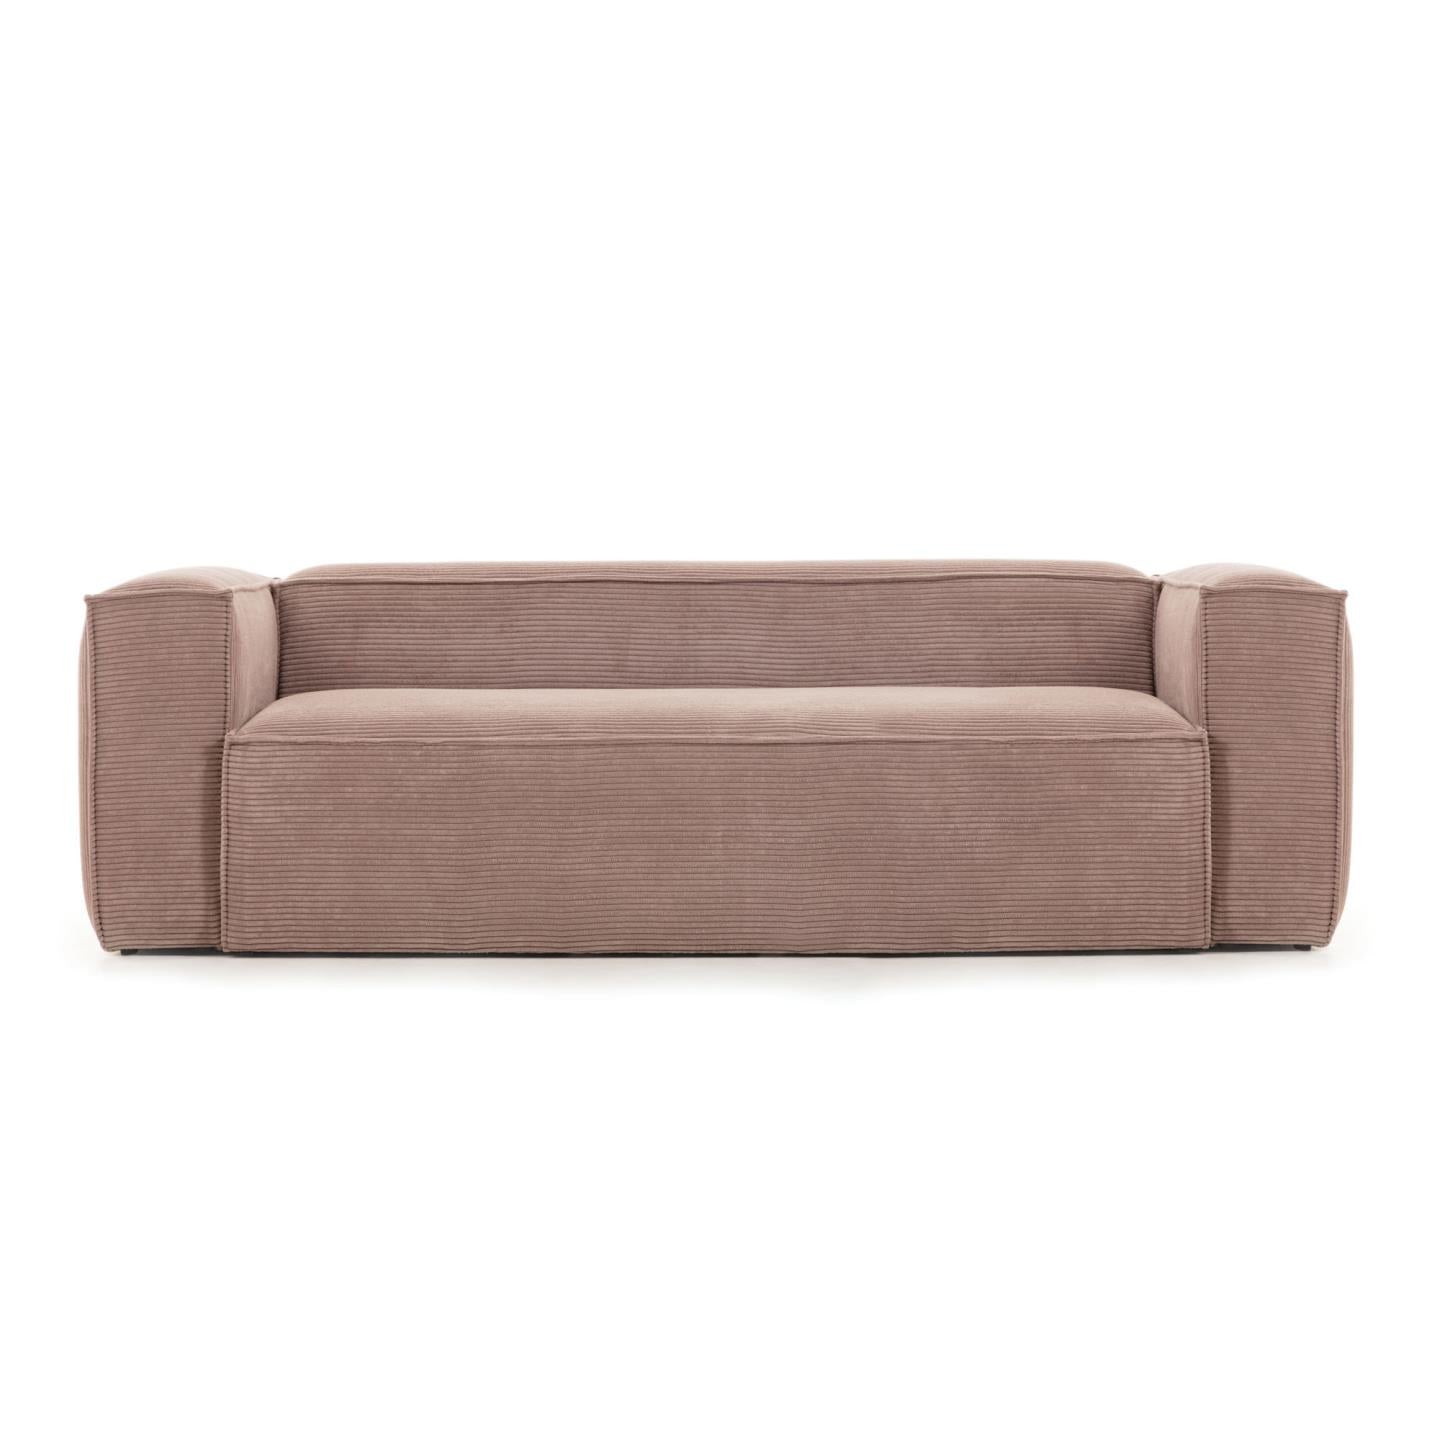 Blok 3 seater sofa in pink wide seam corduroy, 240 cm